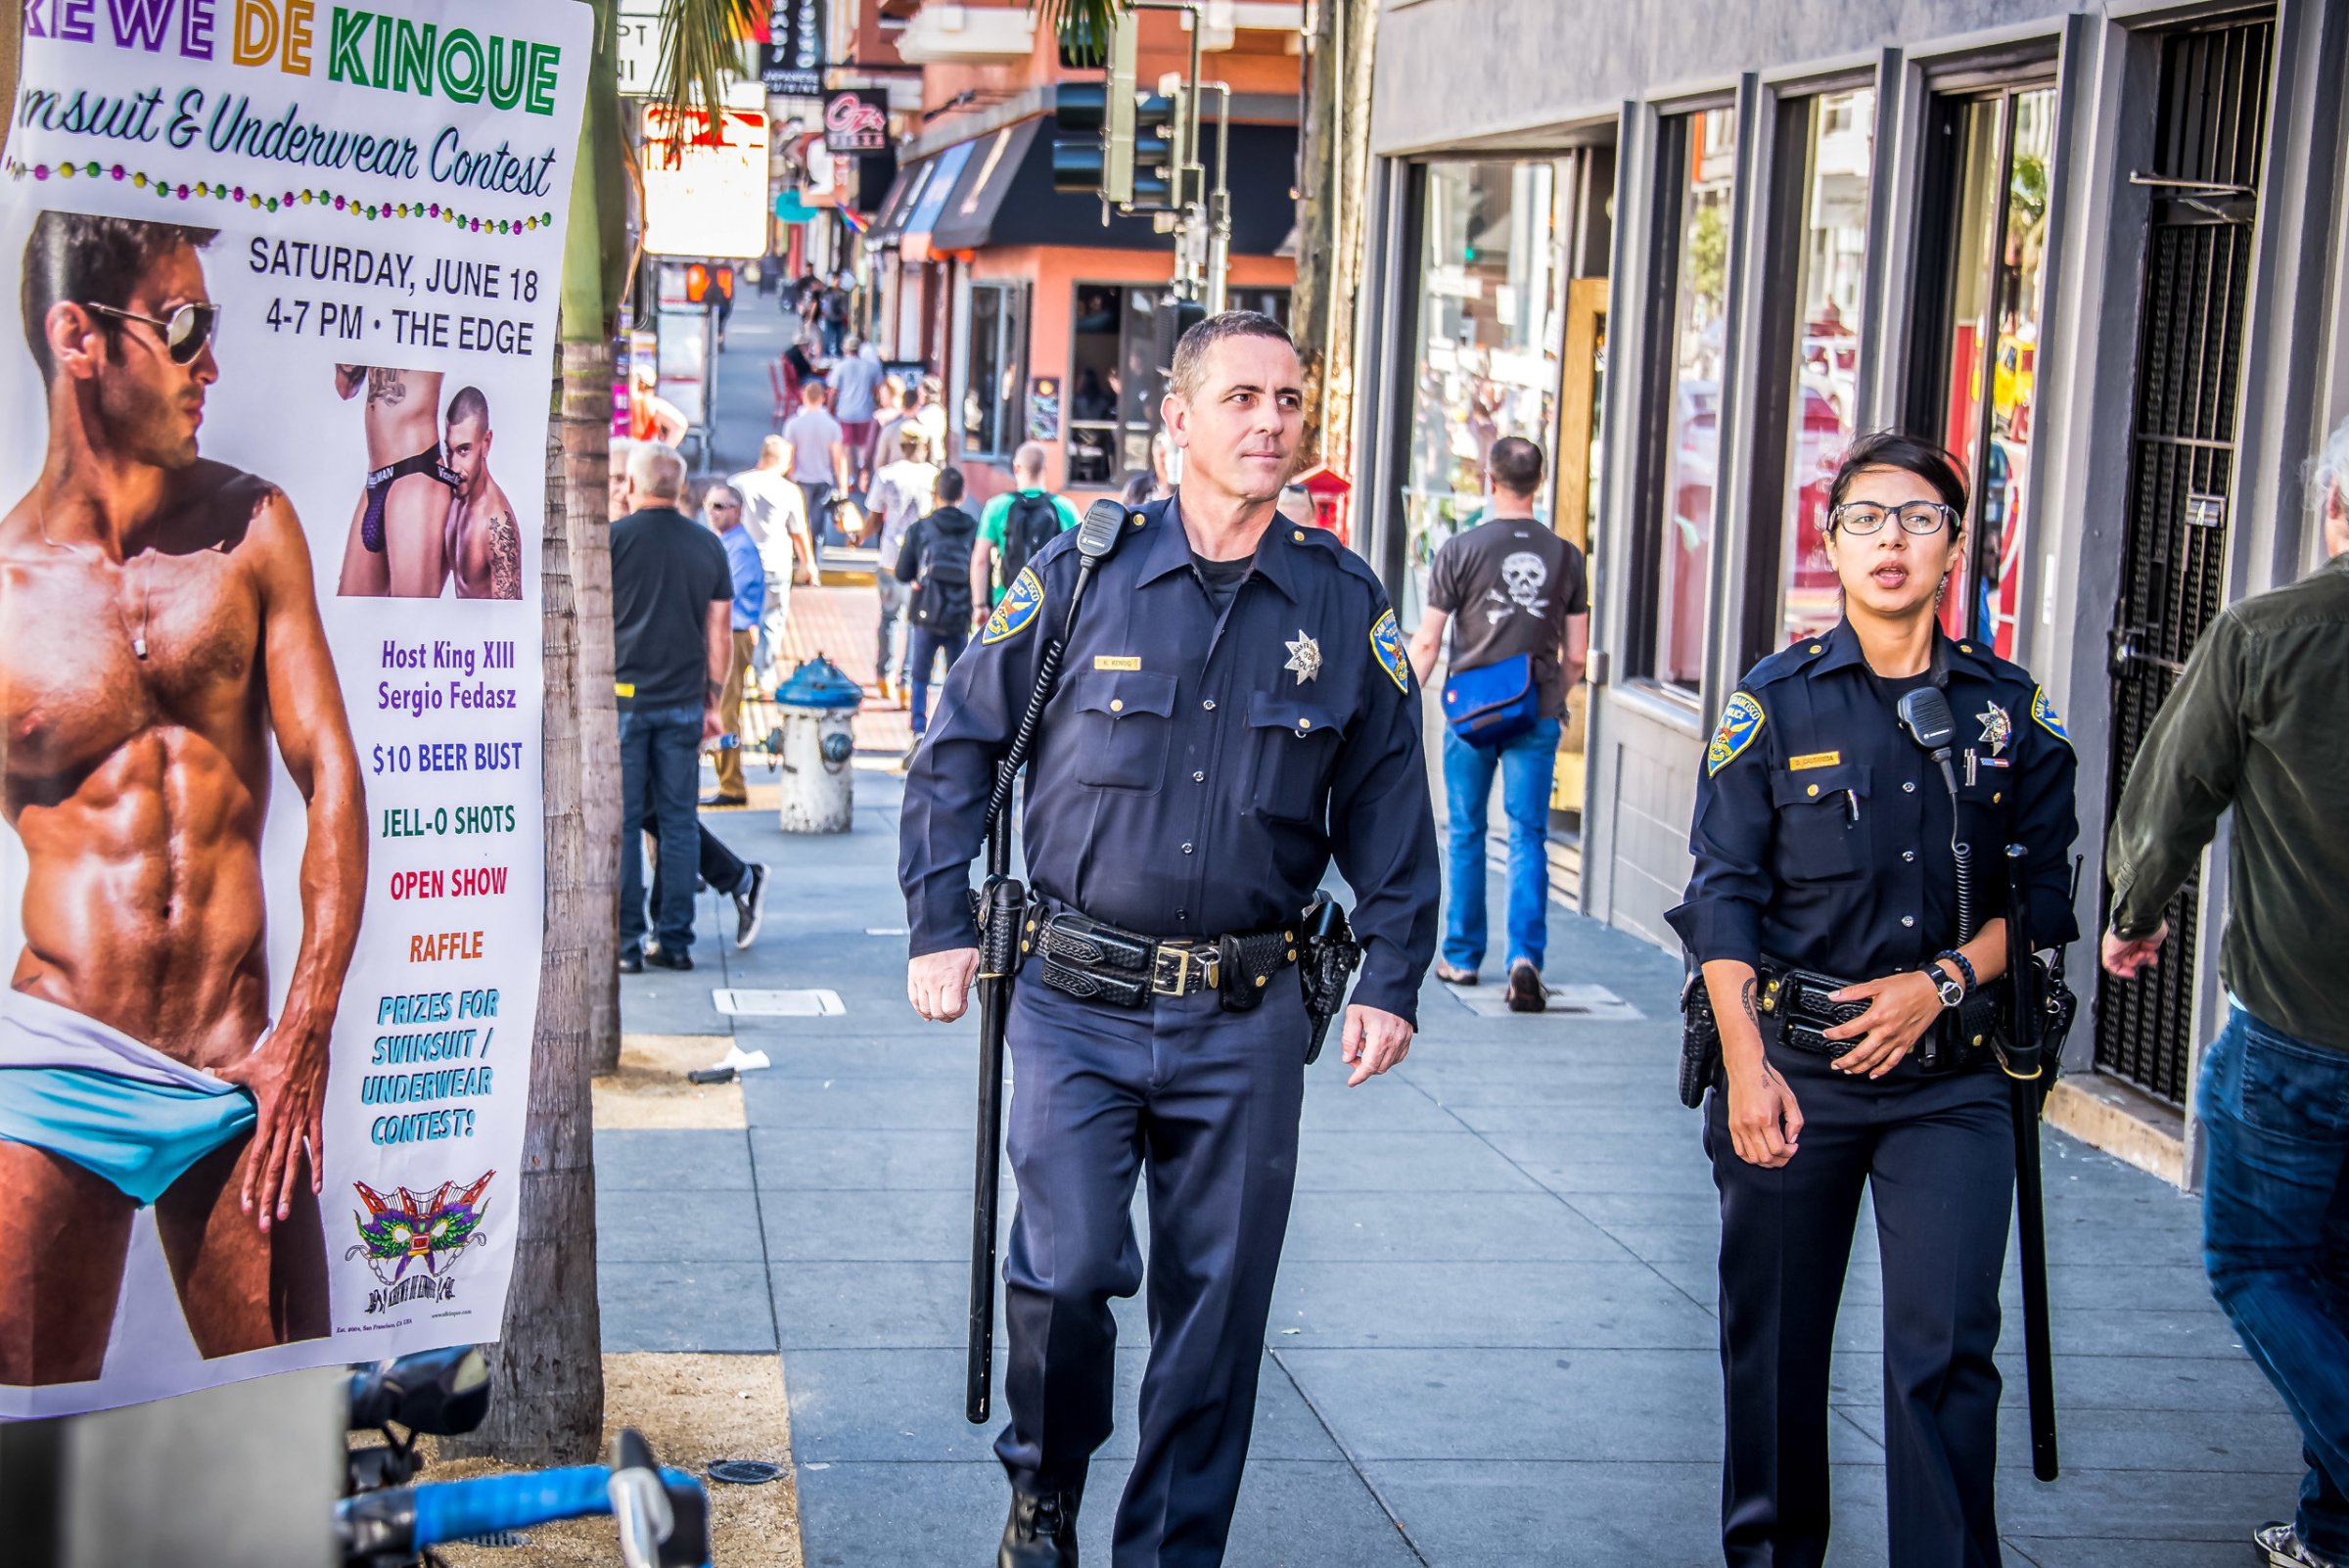 SFPD Officers patrol Castro Street in San Francisco on June 18, 2016.